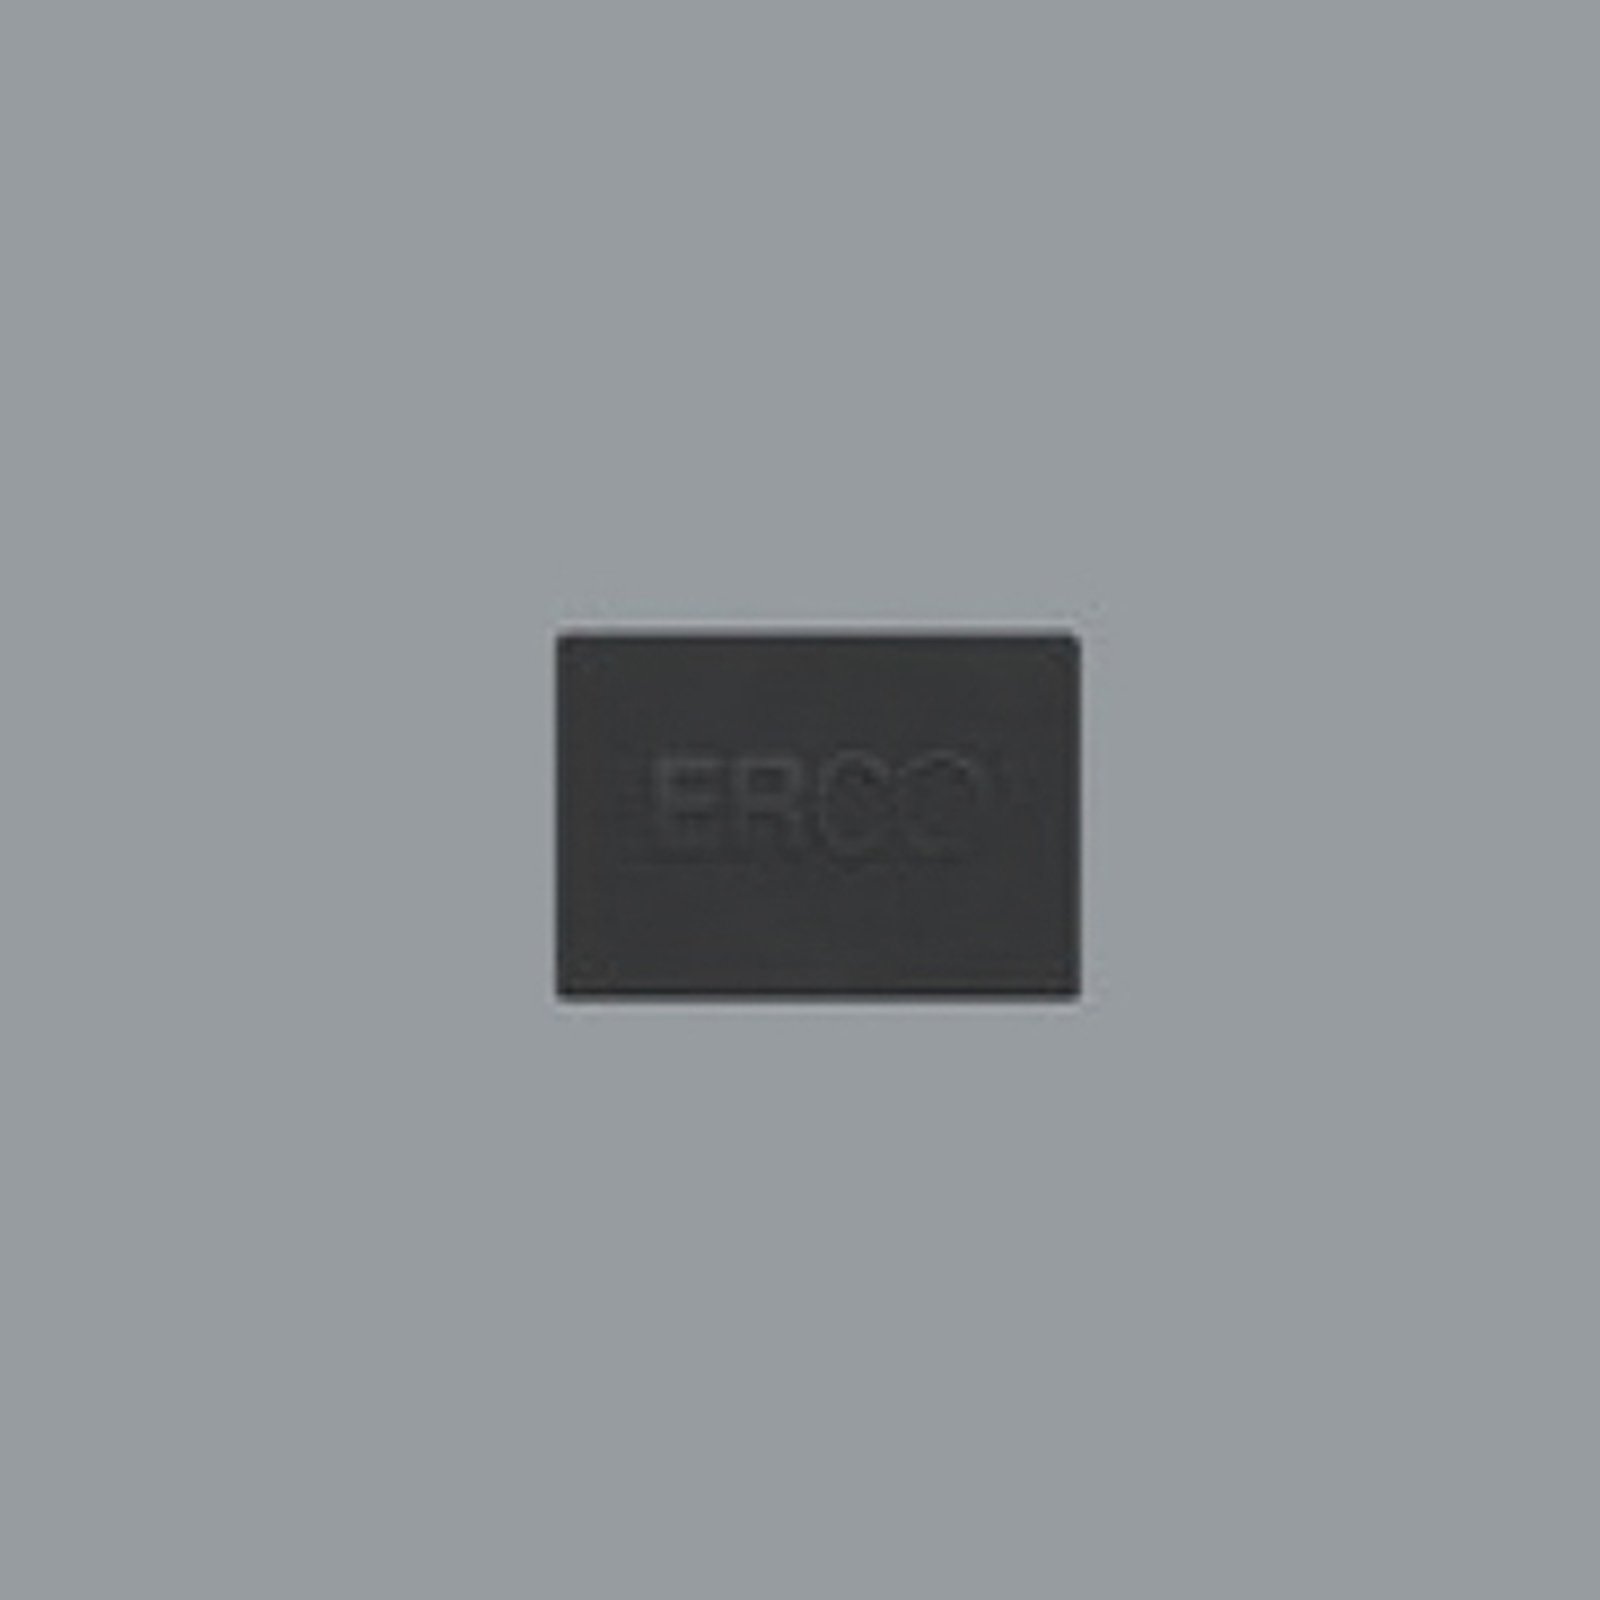 ERCO end plate for Minirail track, black